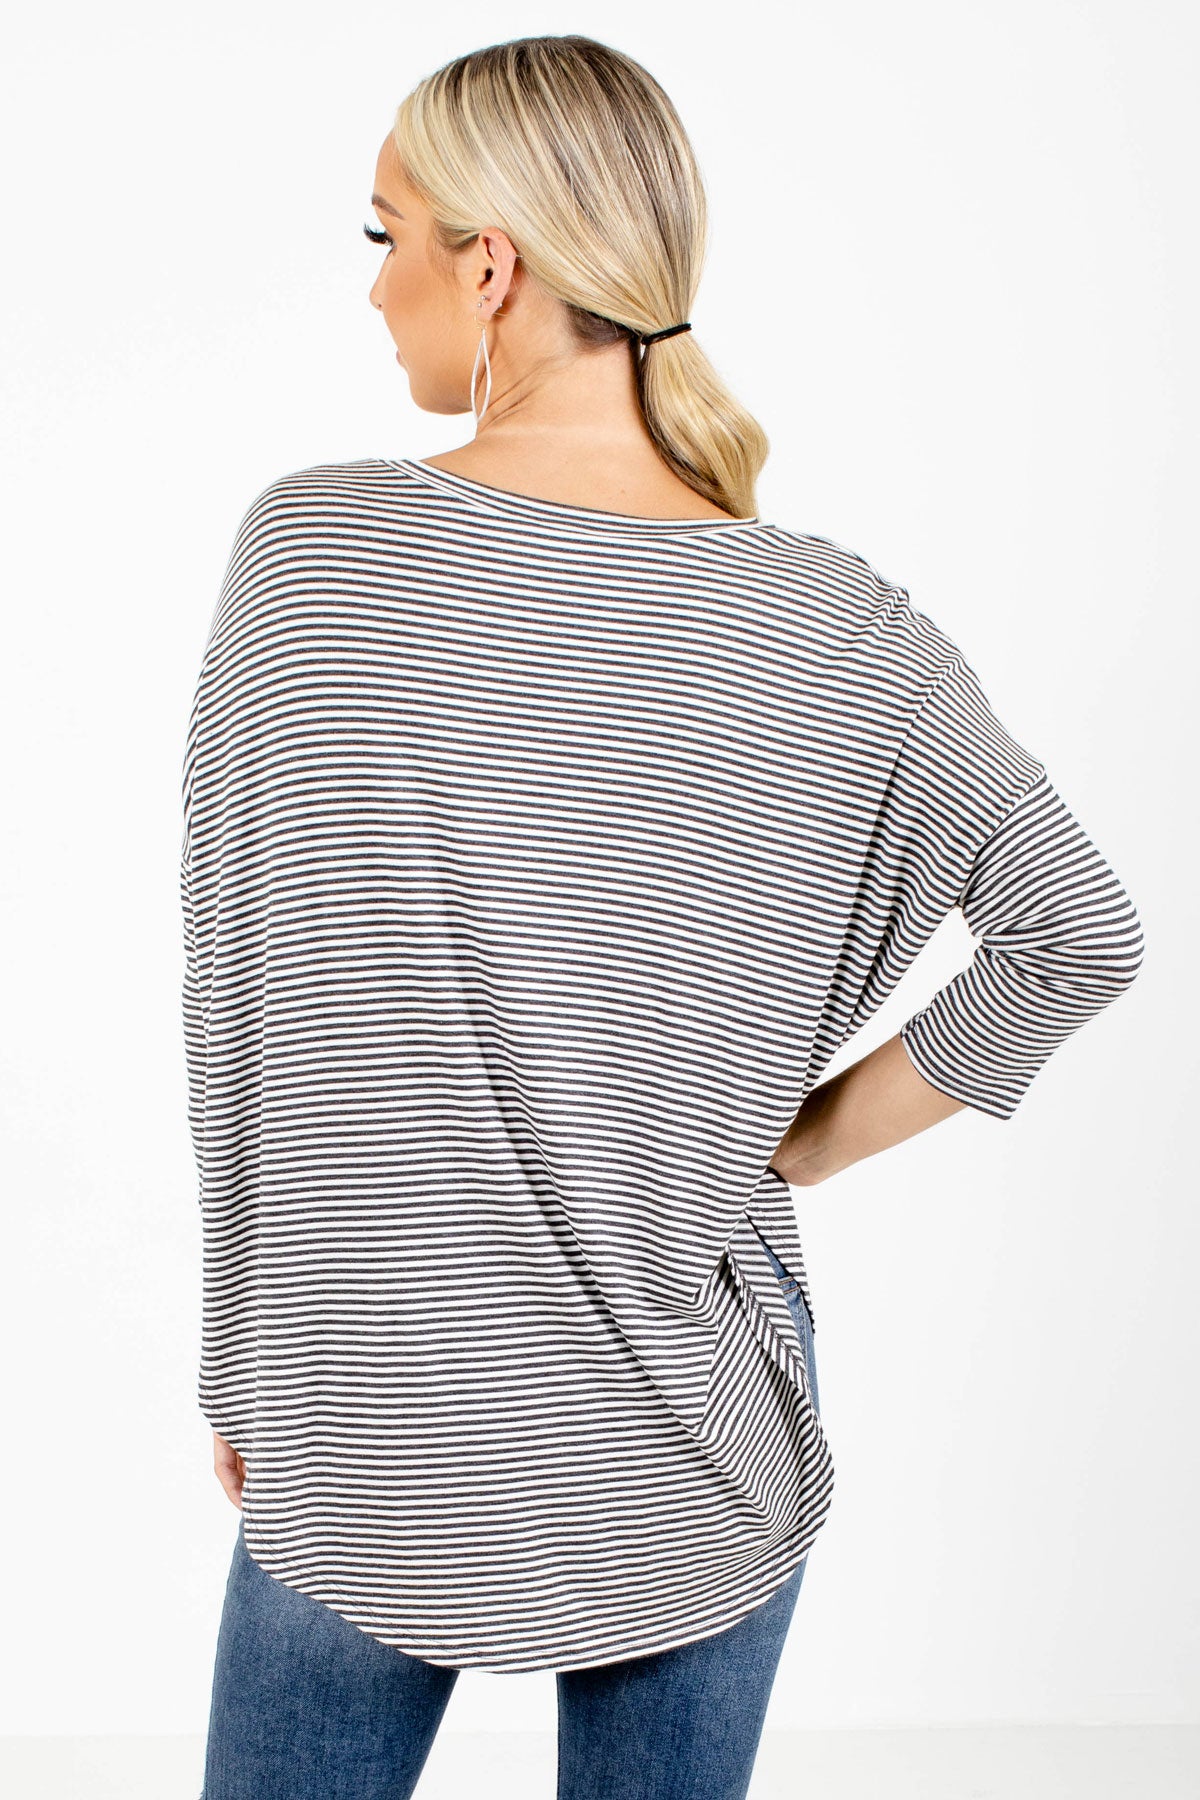 Women's Gray 3/4 Length Sleeve Boutique Top